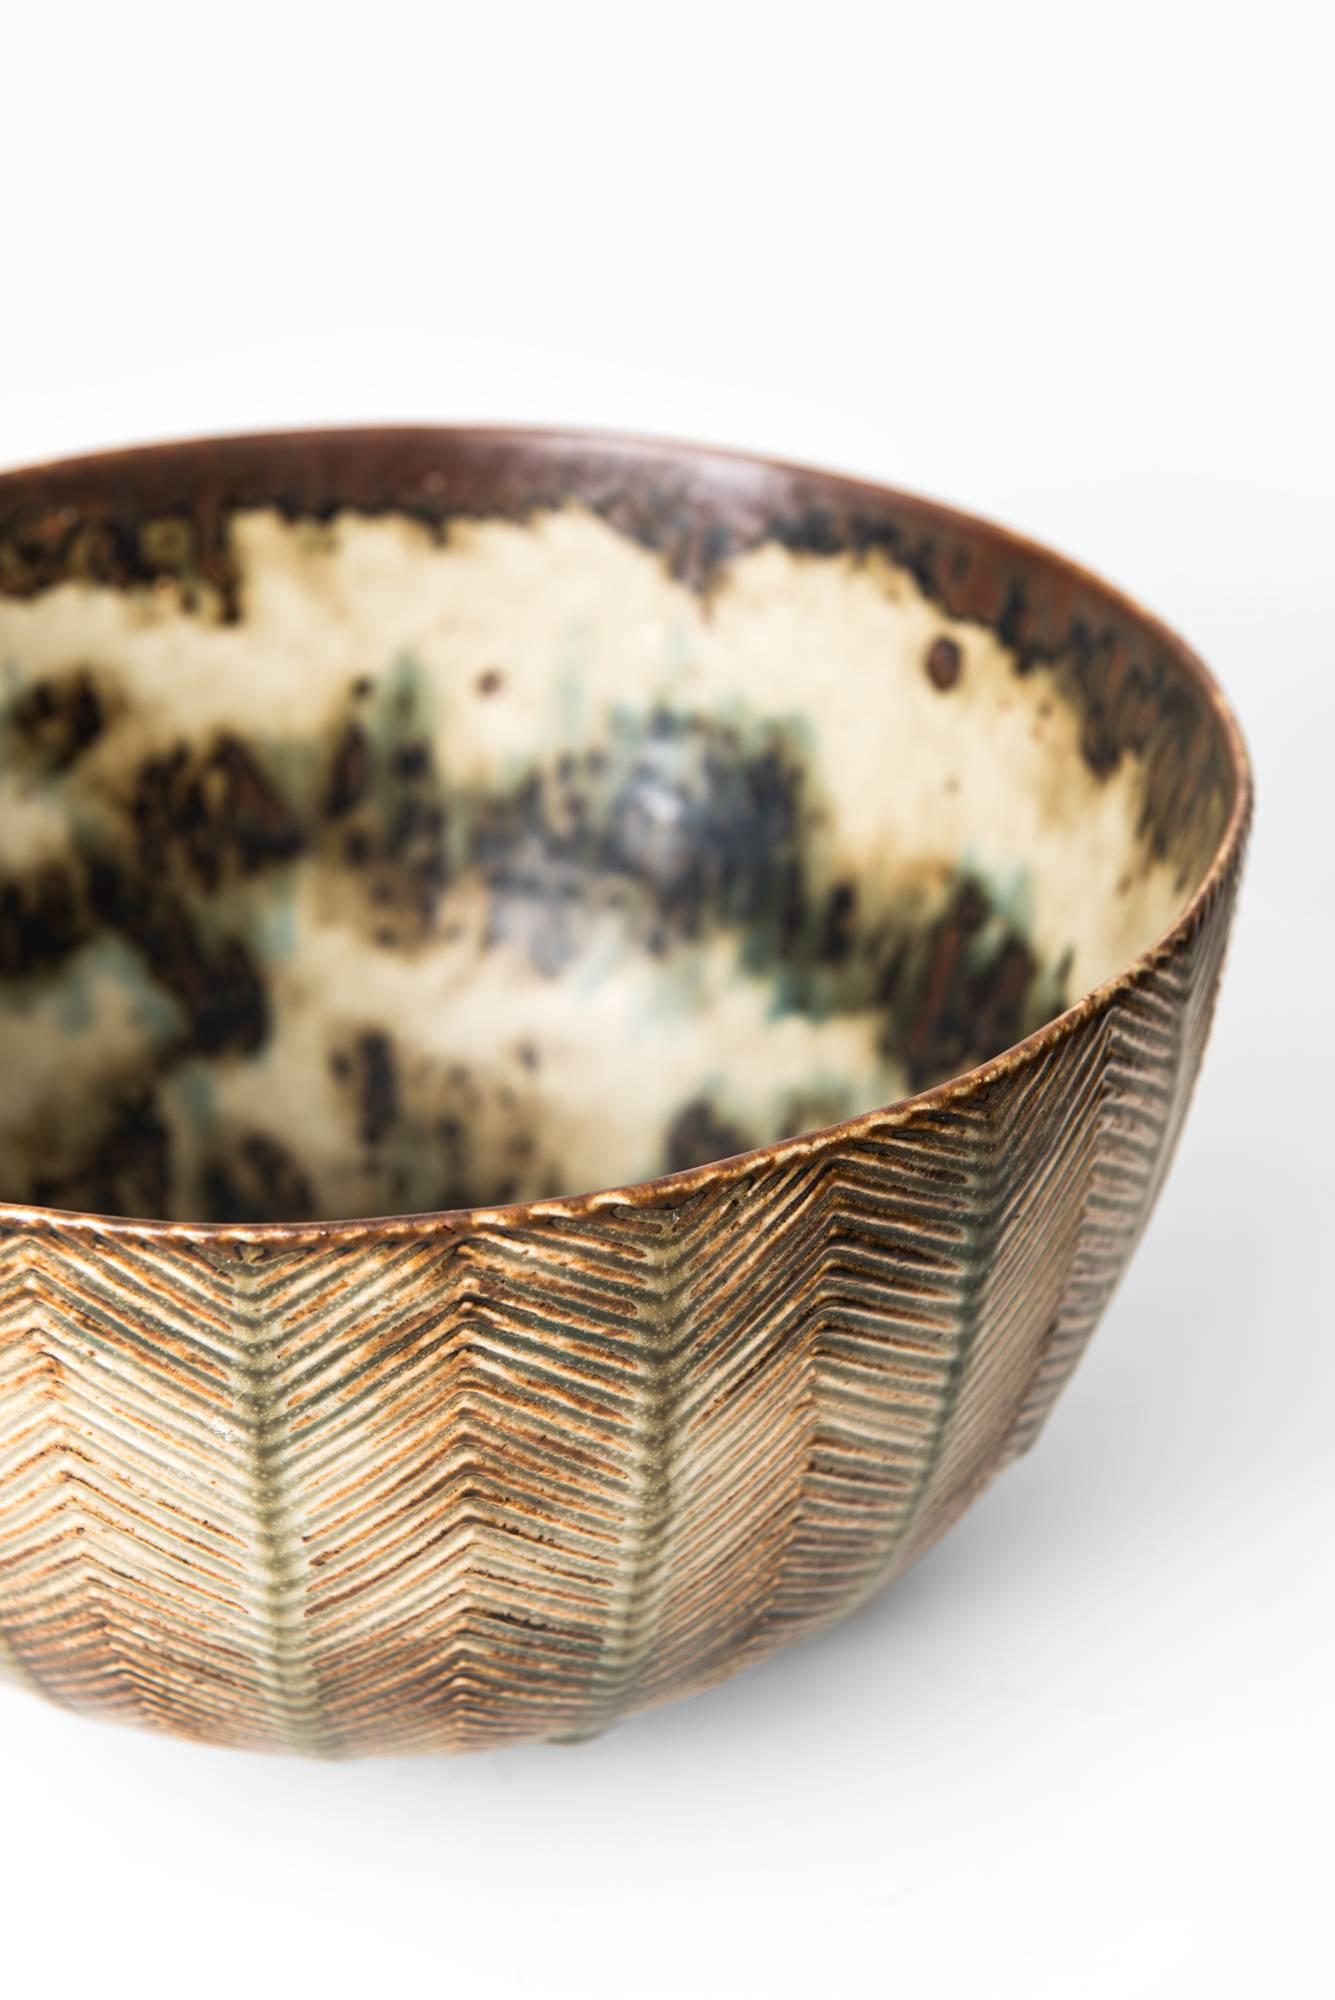 Danish Axel Salto Ceramic Bowl Nr 20716 by Royal Copenhagen in Denmark